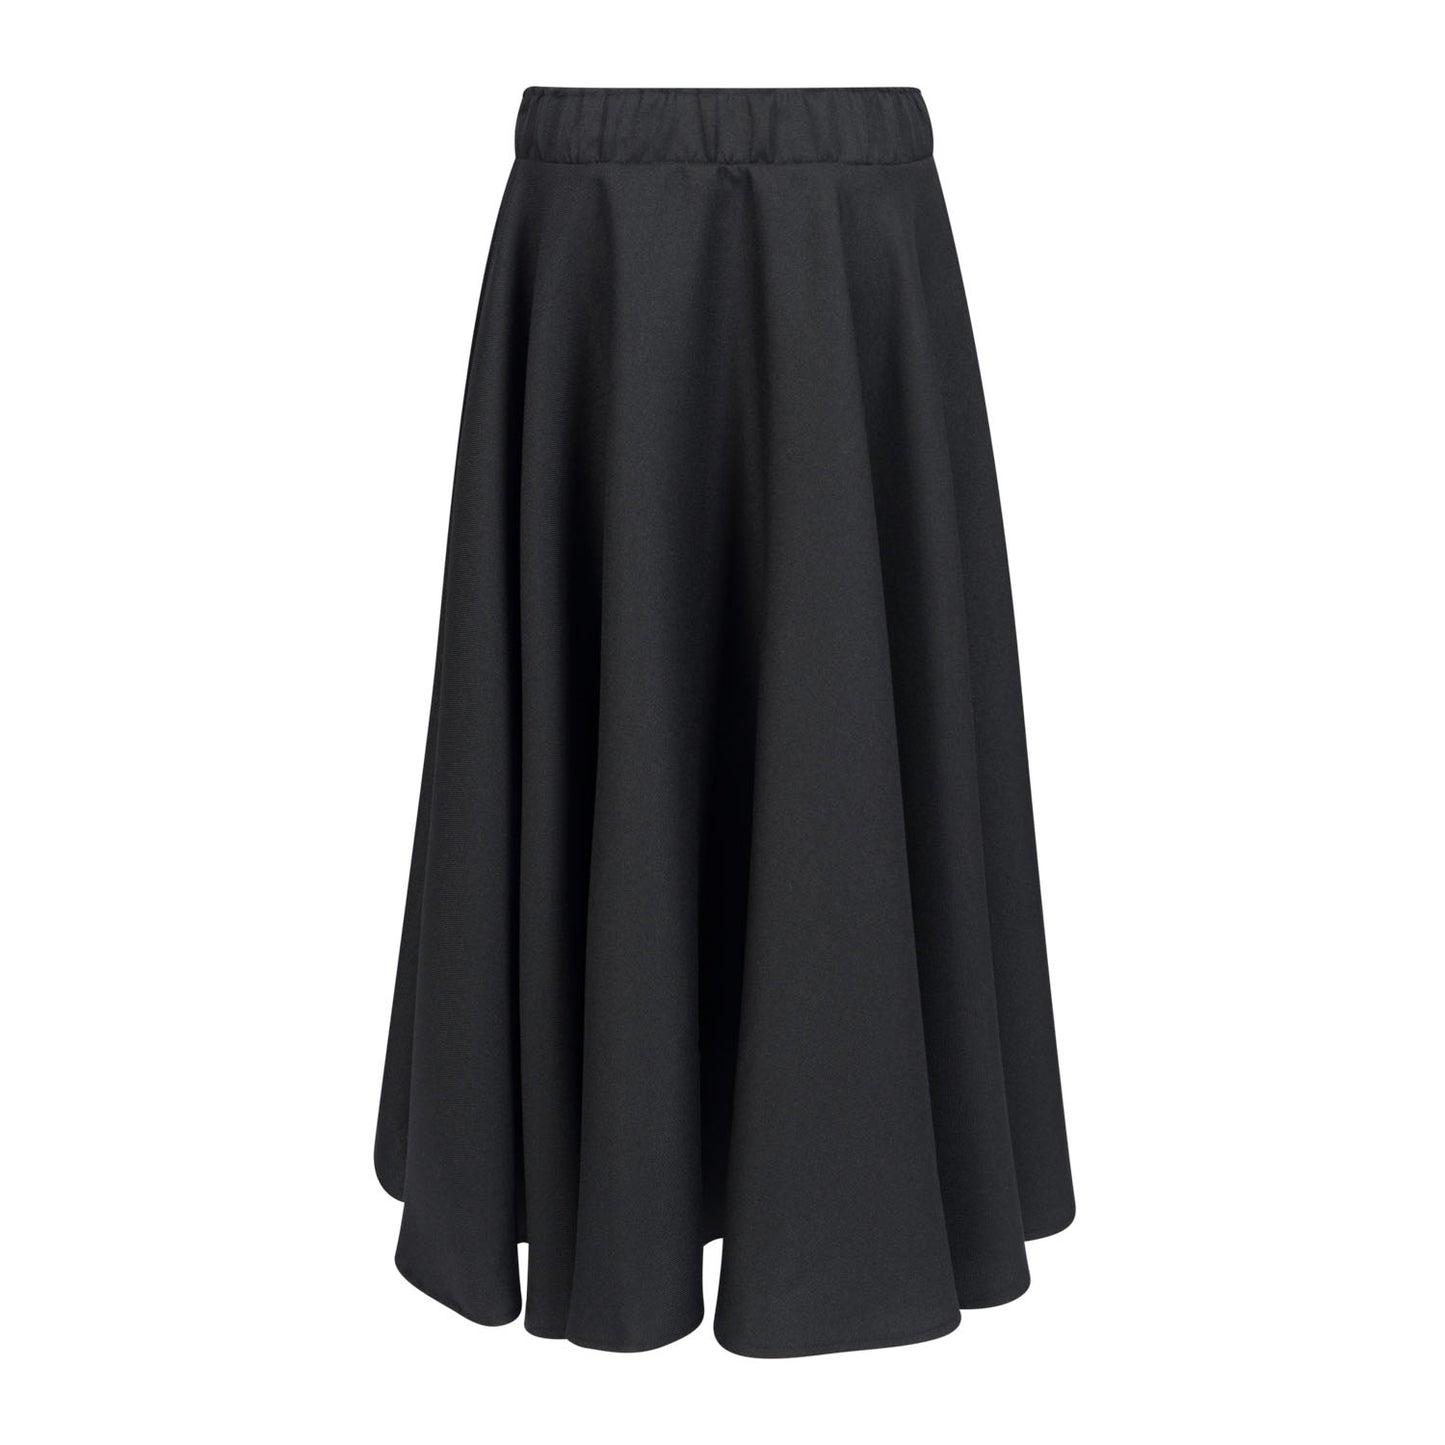 Black Press Stud Skirt